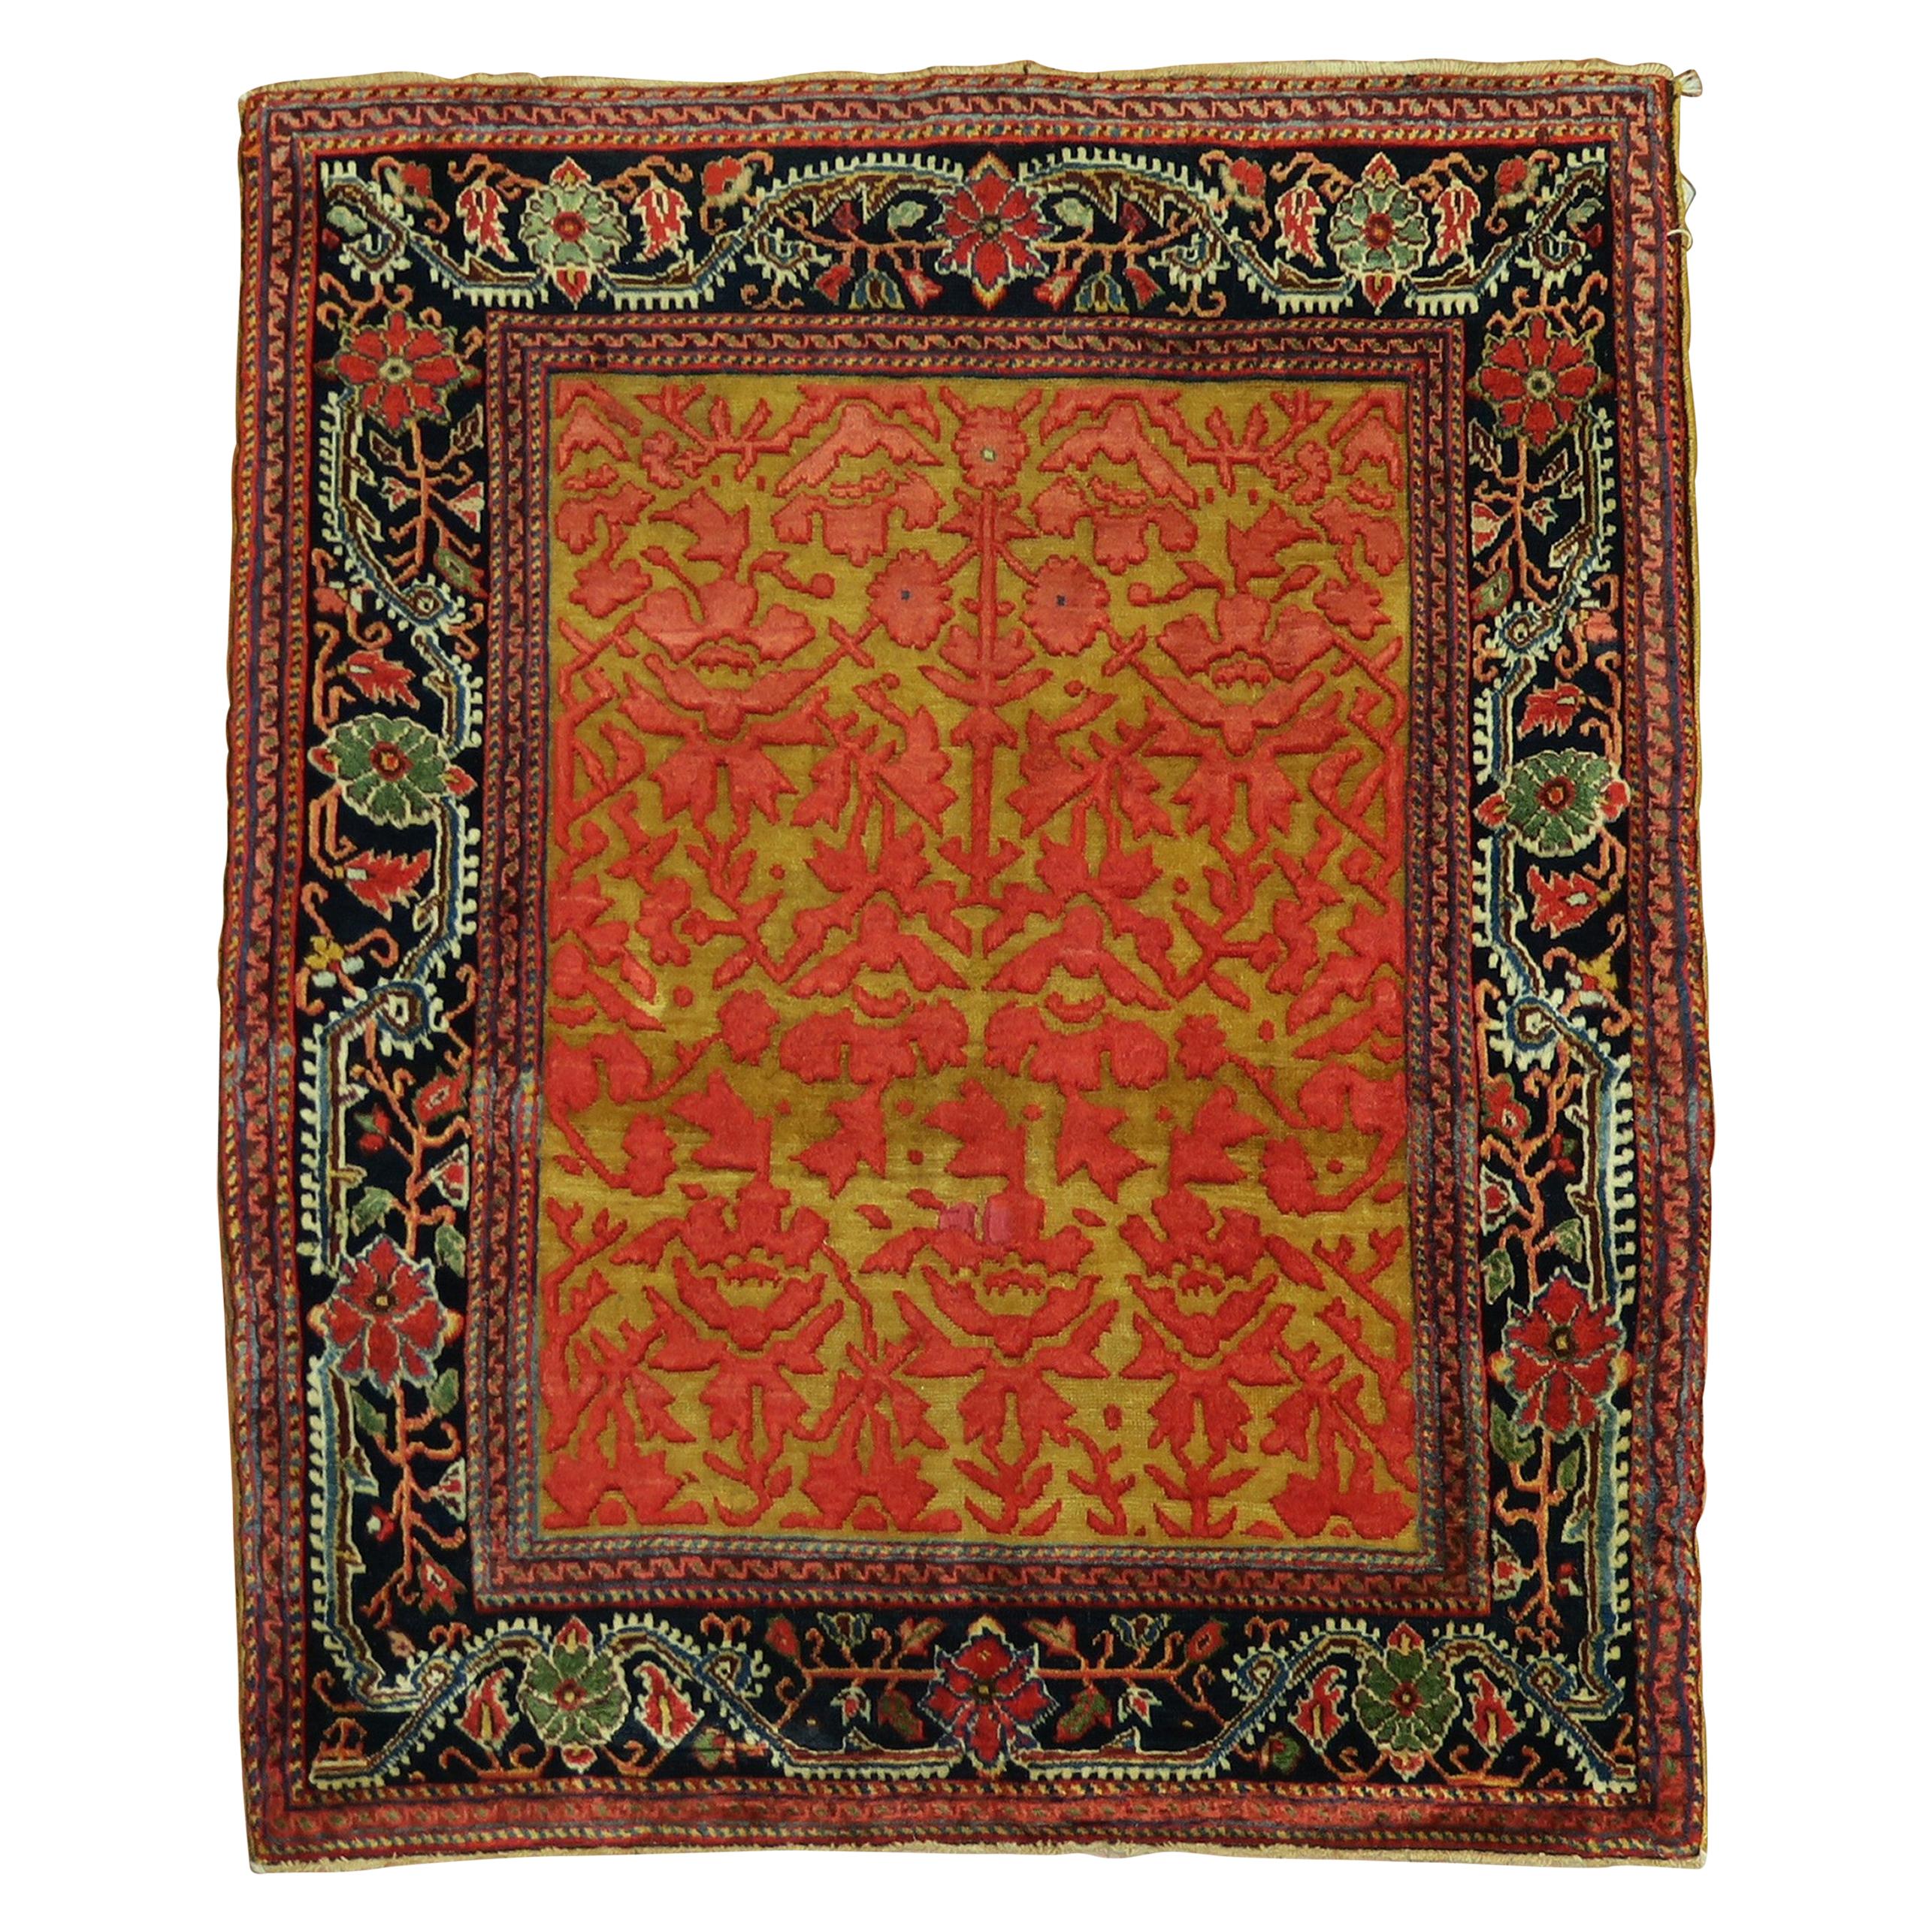 Jewel Tone Early 20th Century Superfine Quality Antique Persian Jozan Souf Mat